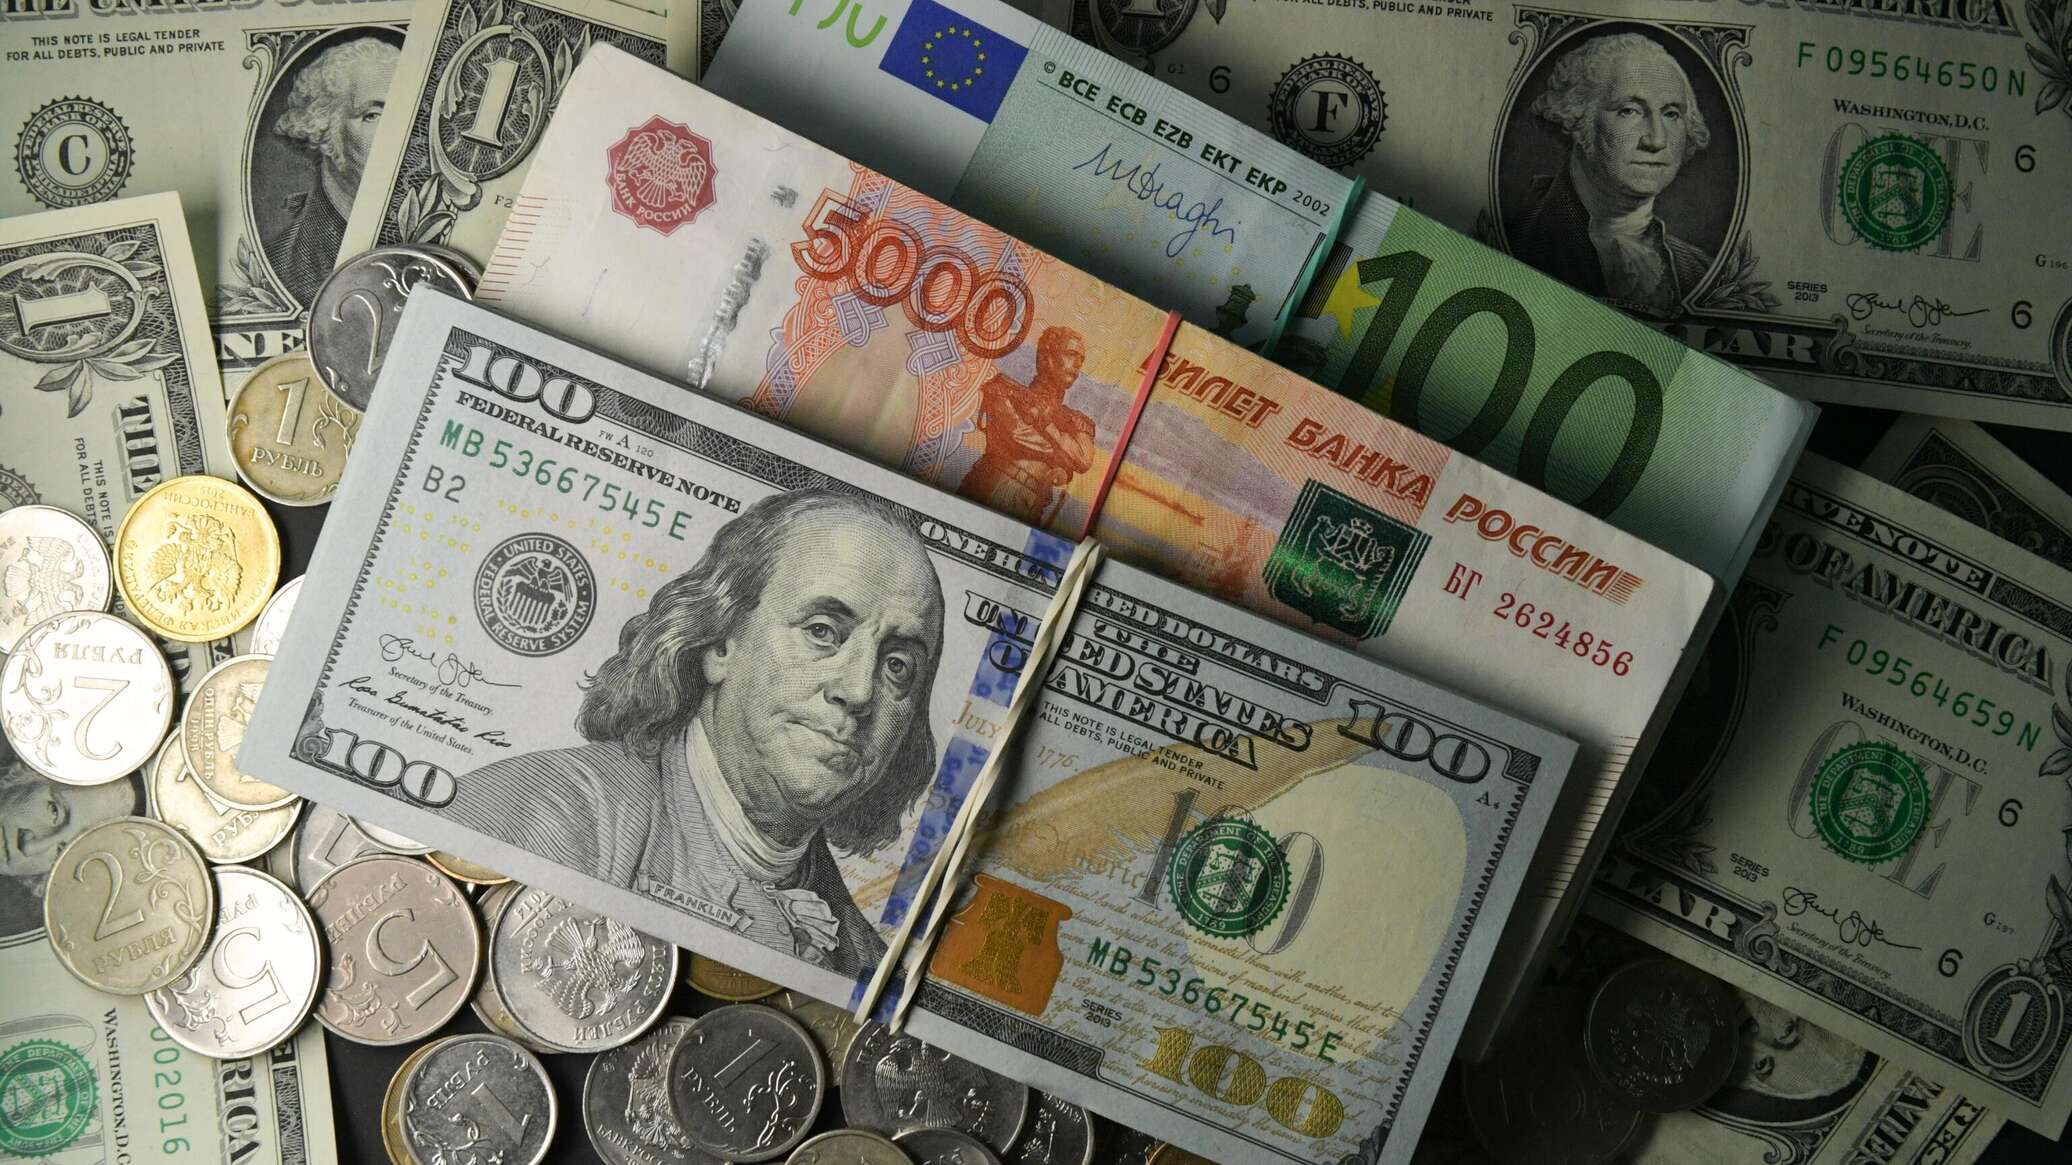 Доллар евро российский